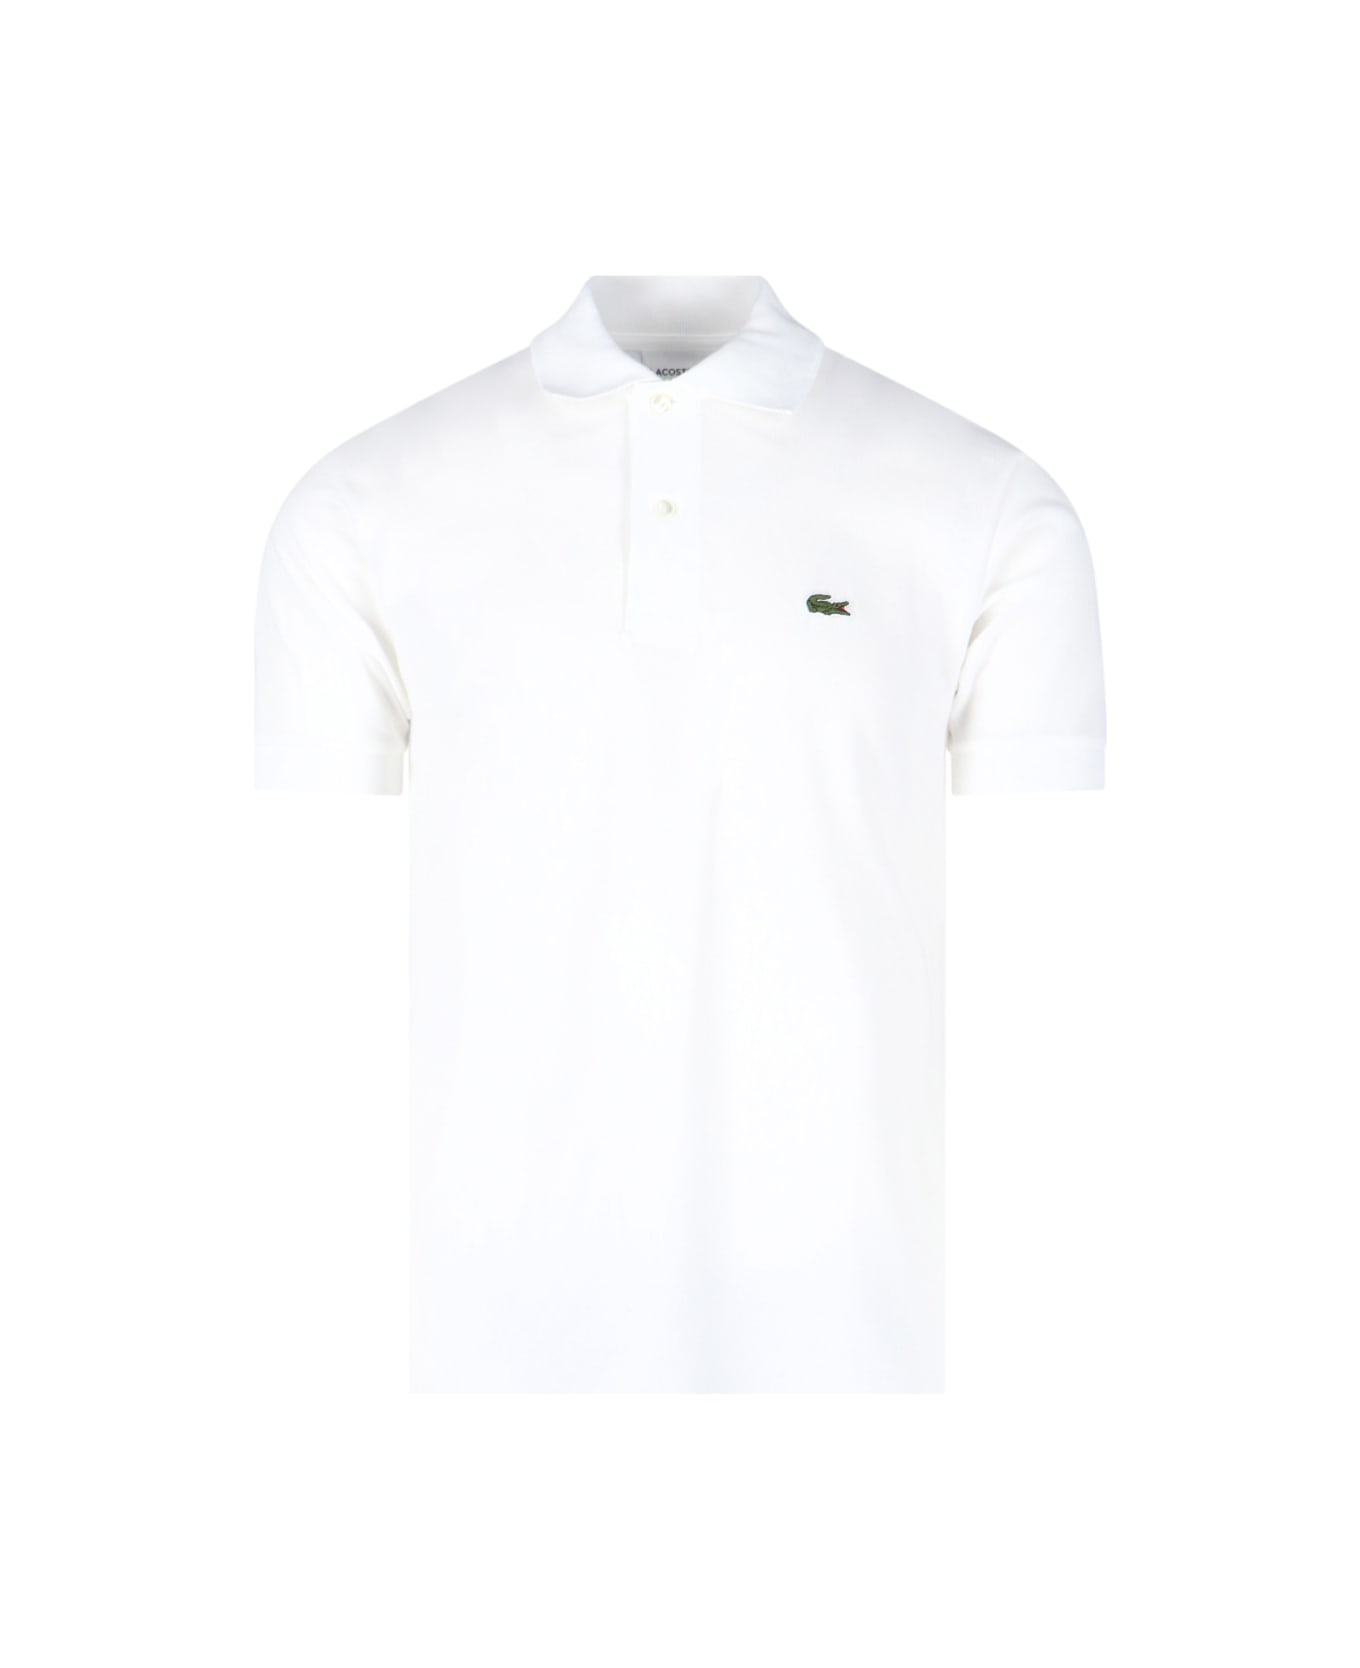 Lacoste Classic Design Polo Shirt